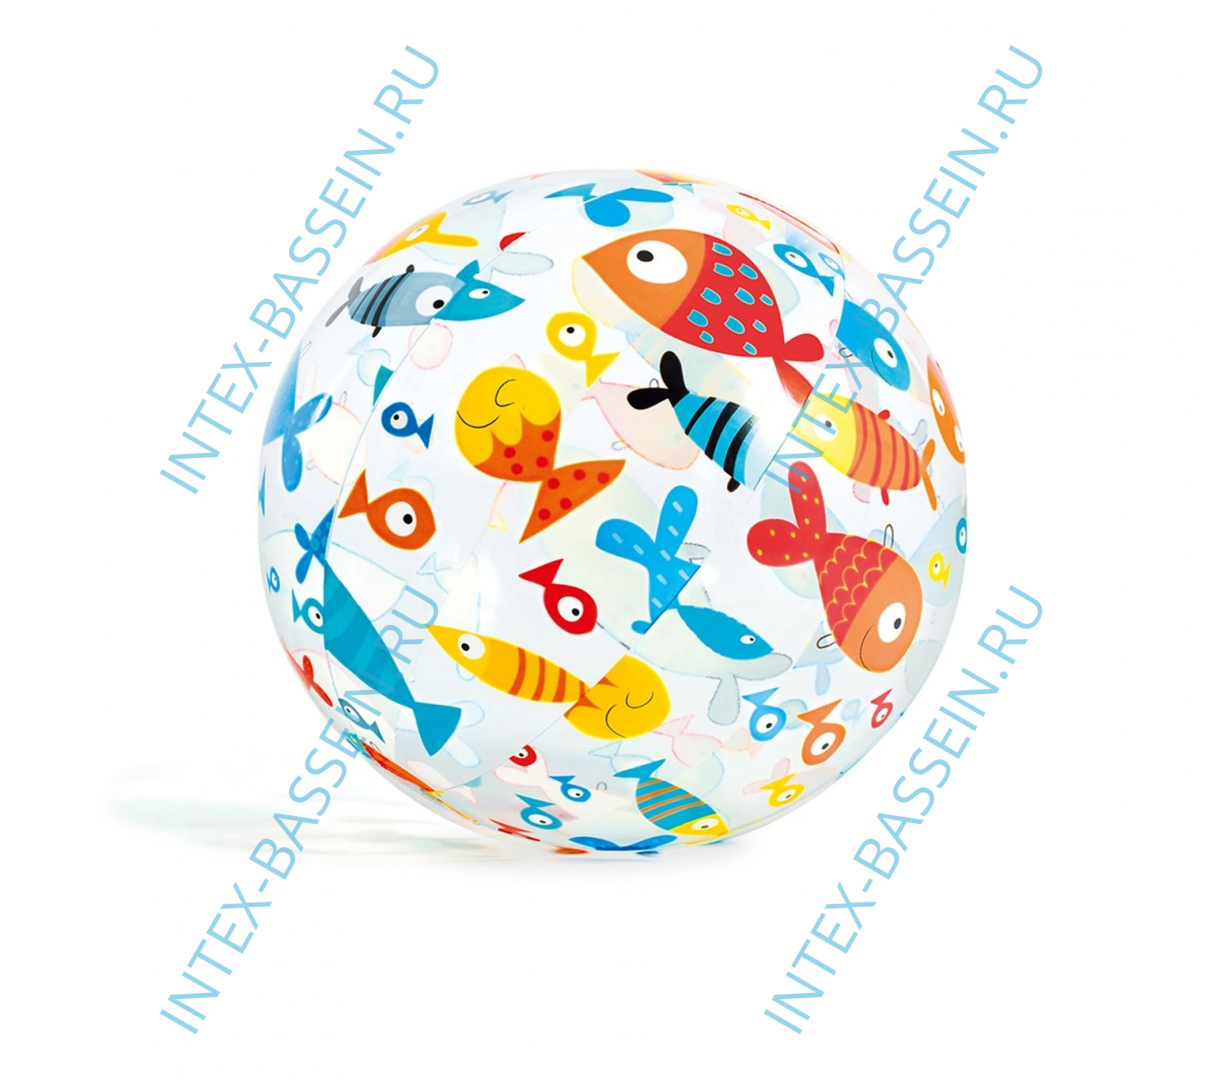 Надувной мяч INTEX "Рыбки" 51 см, артикул 59040-R